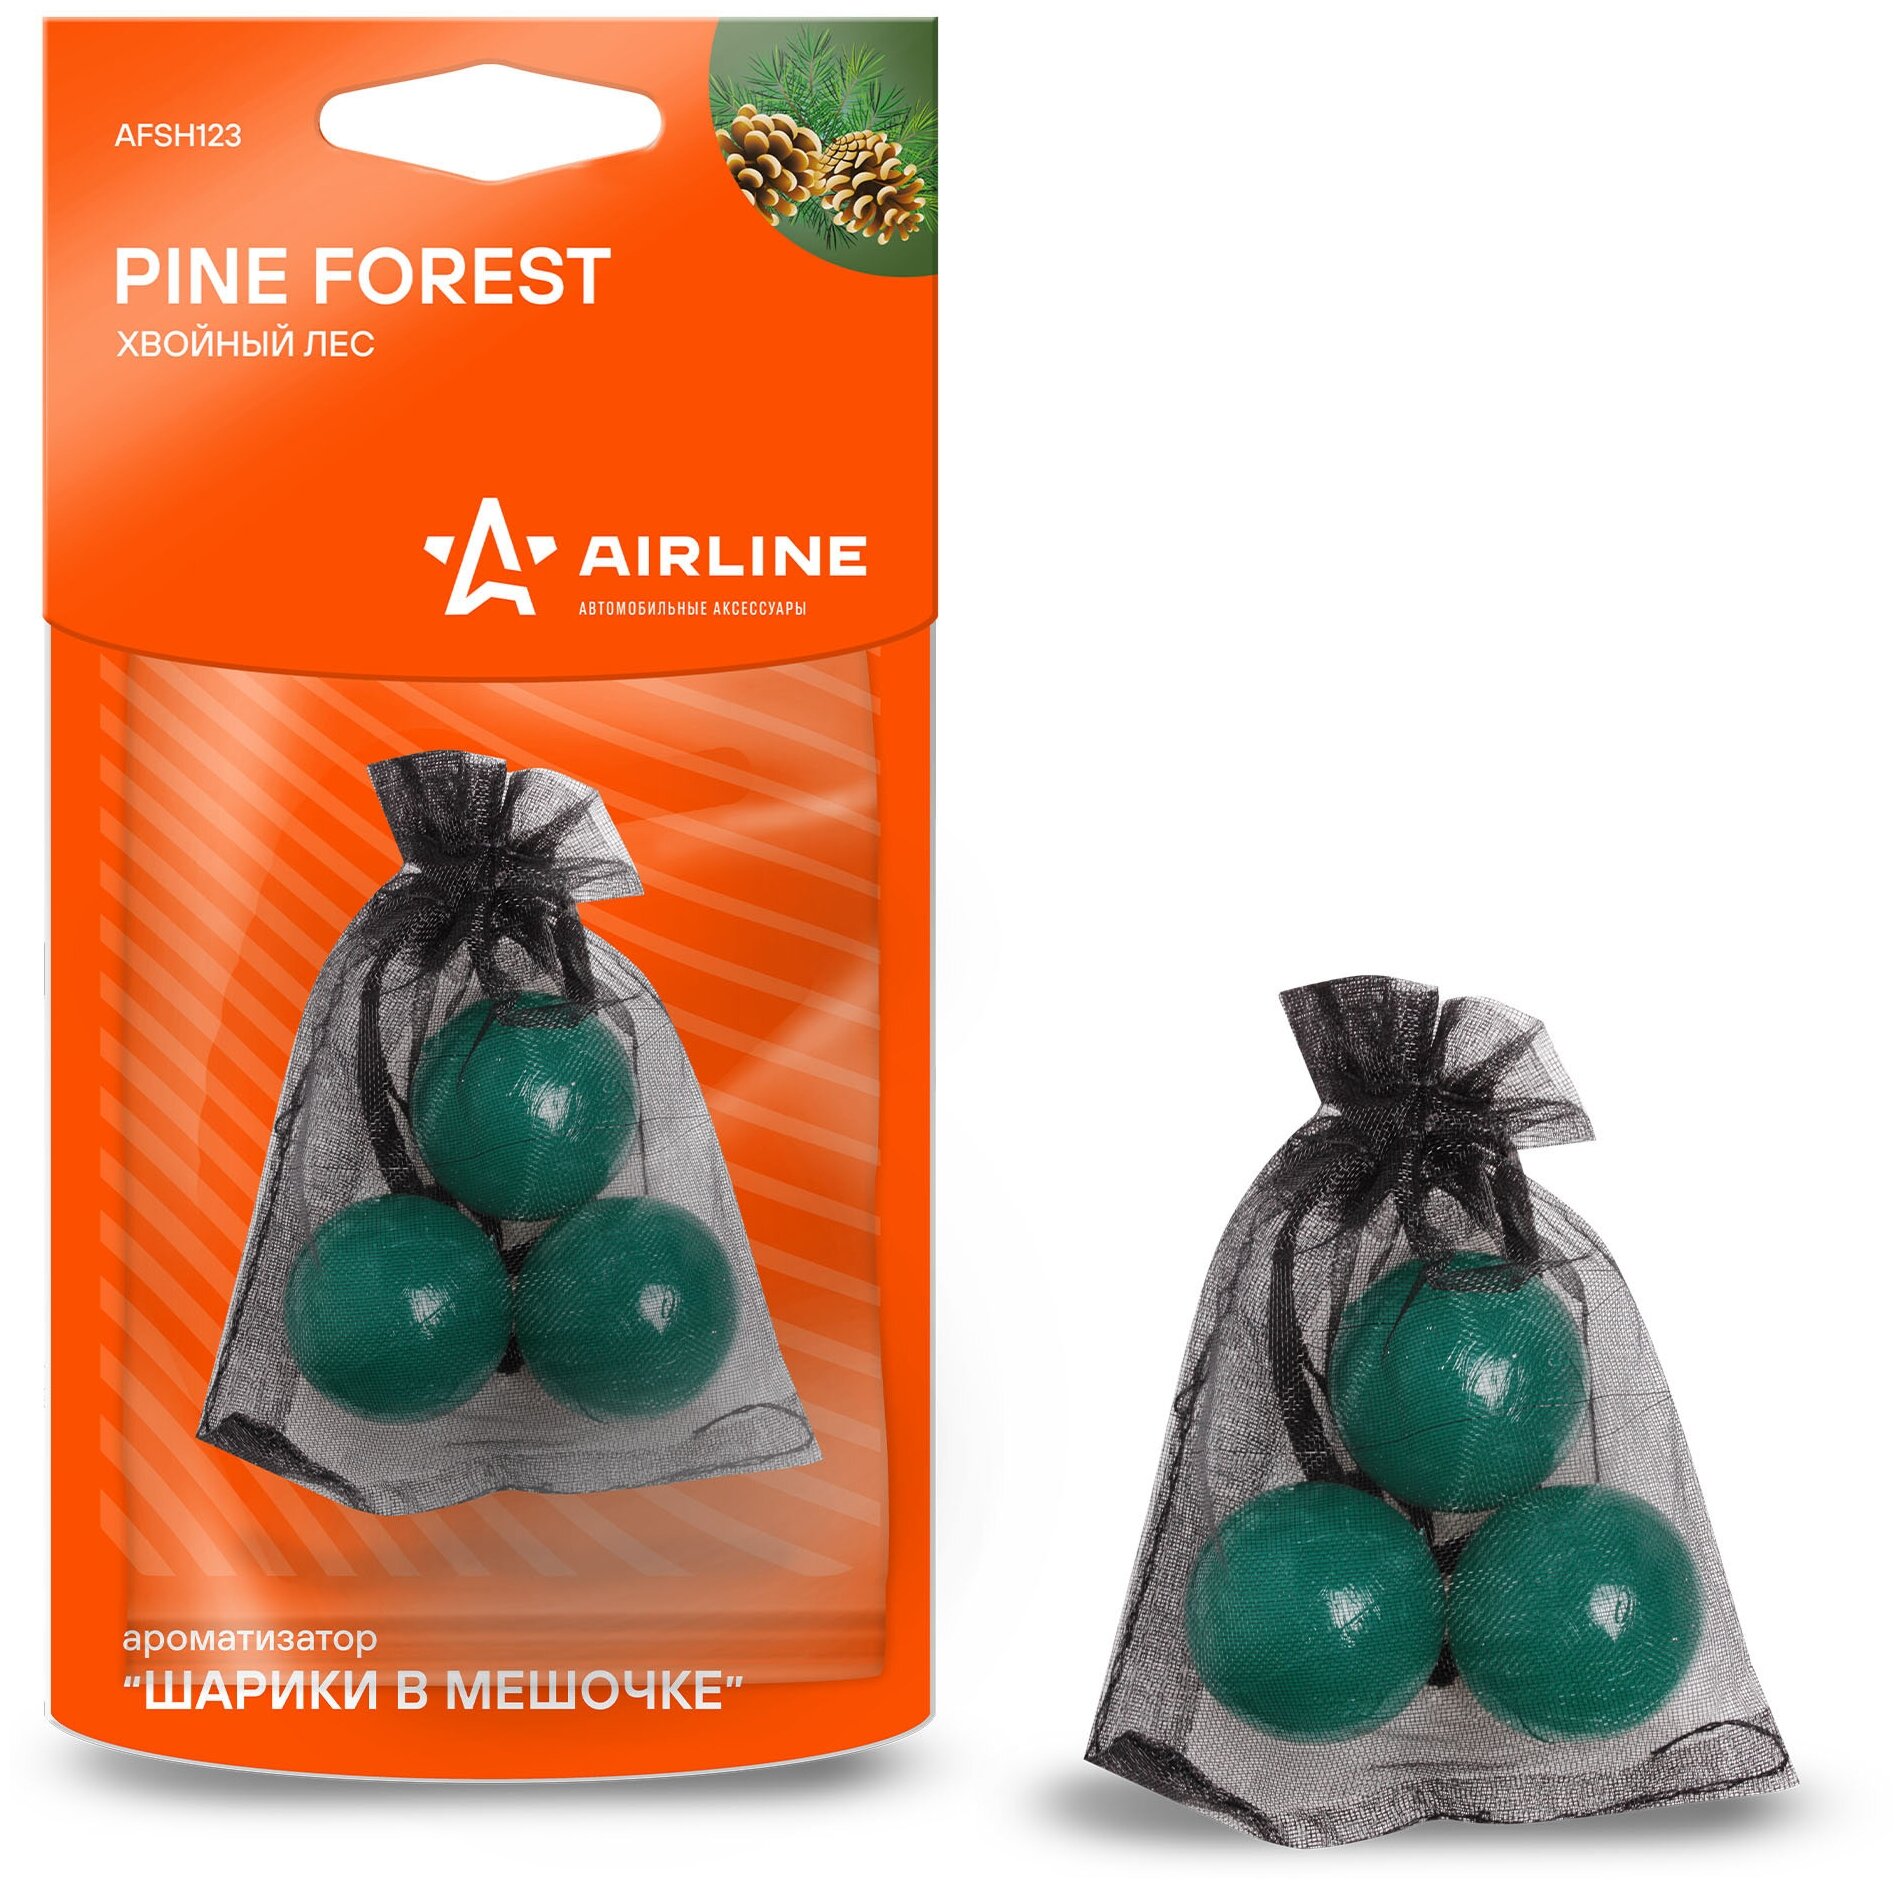 Airline ароматизатор шарики в мешочке хвойный лес afsh123